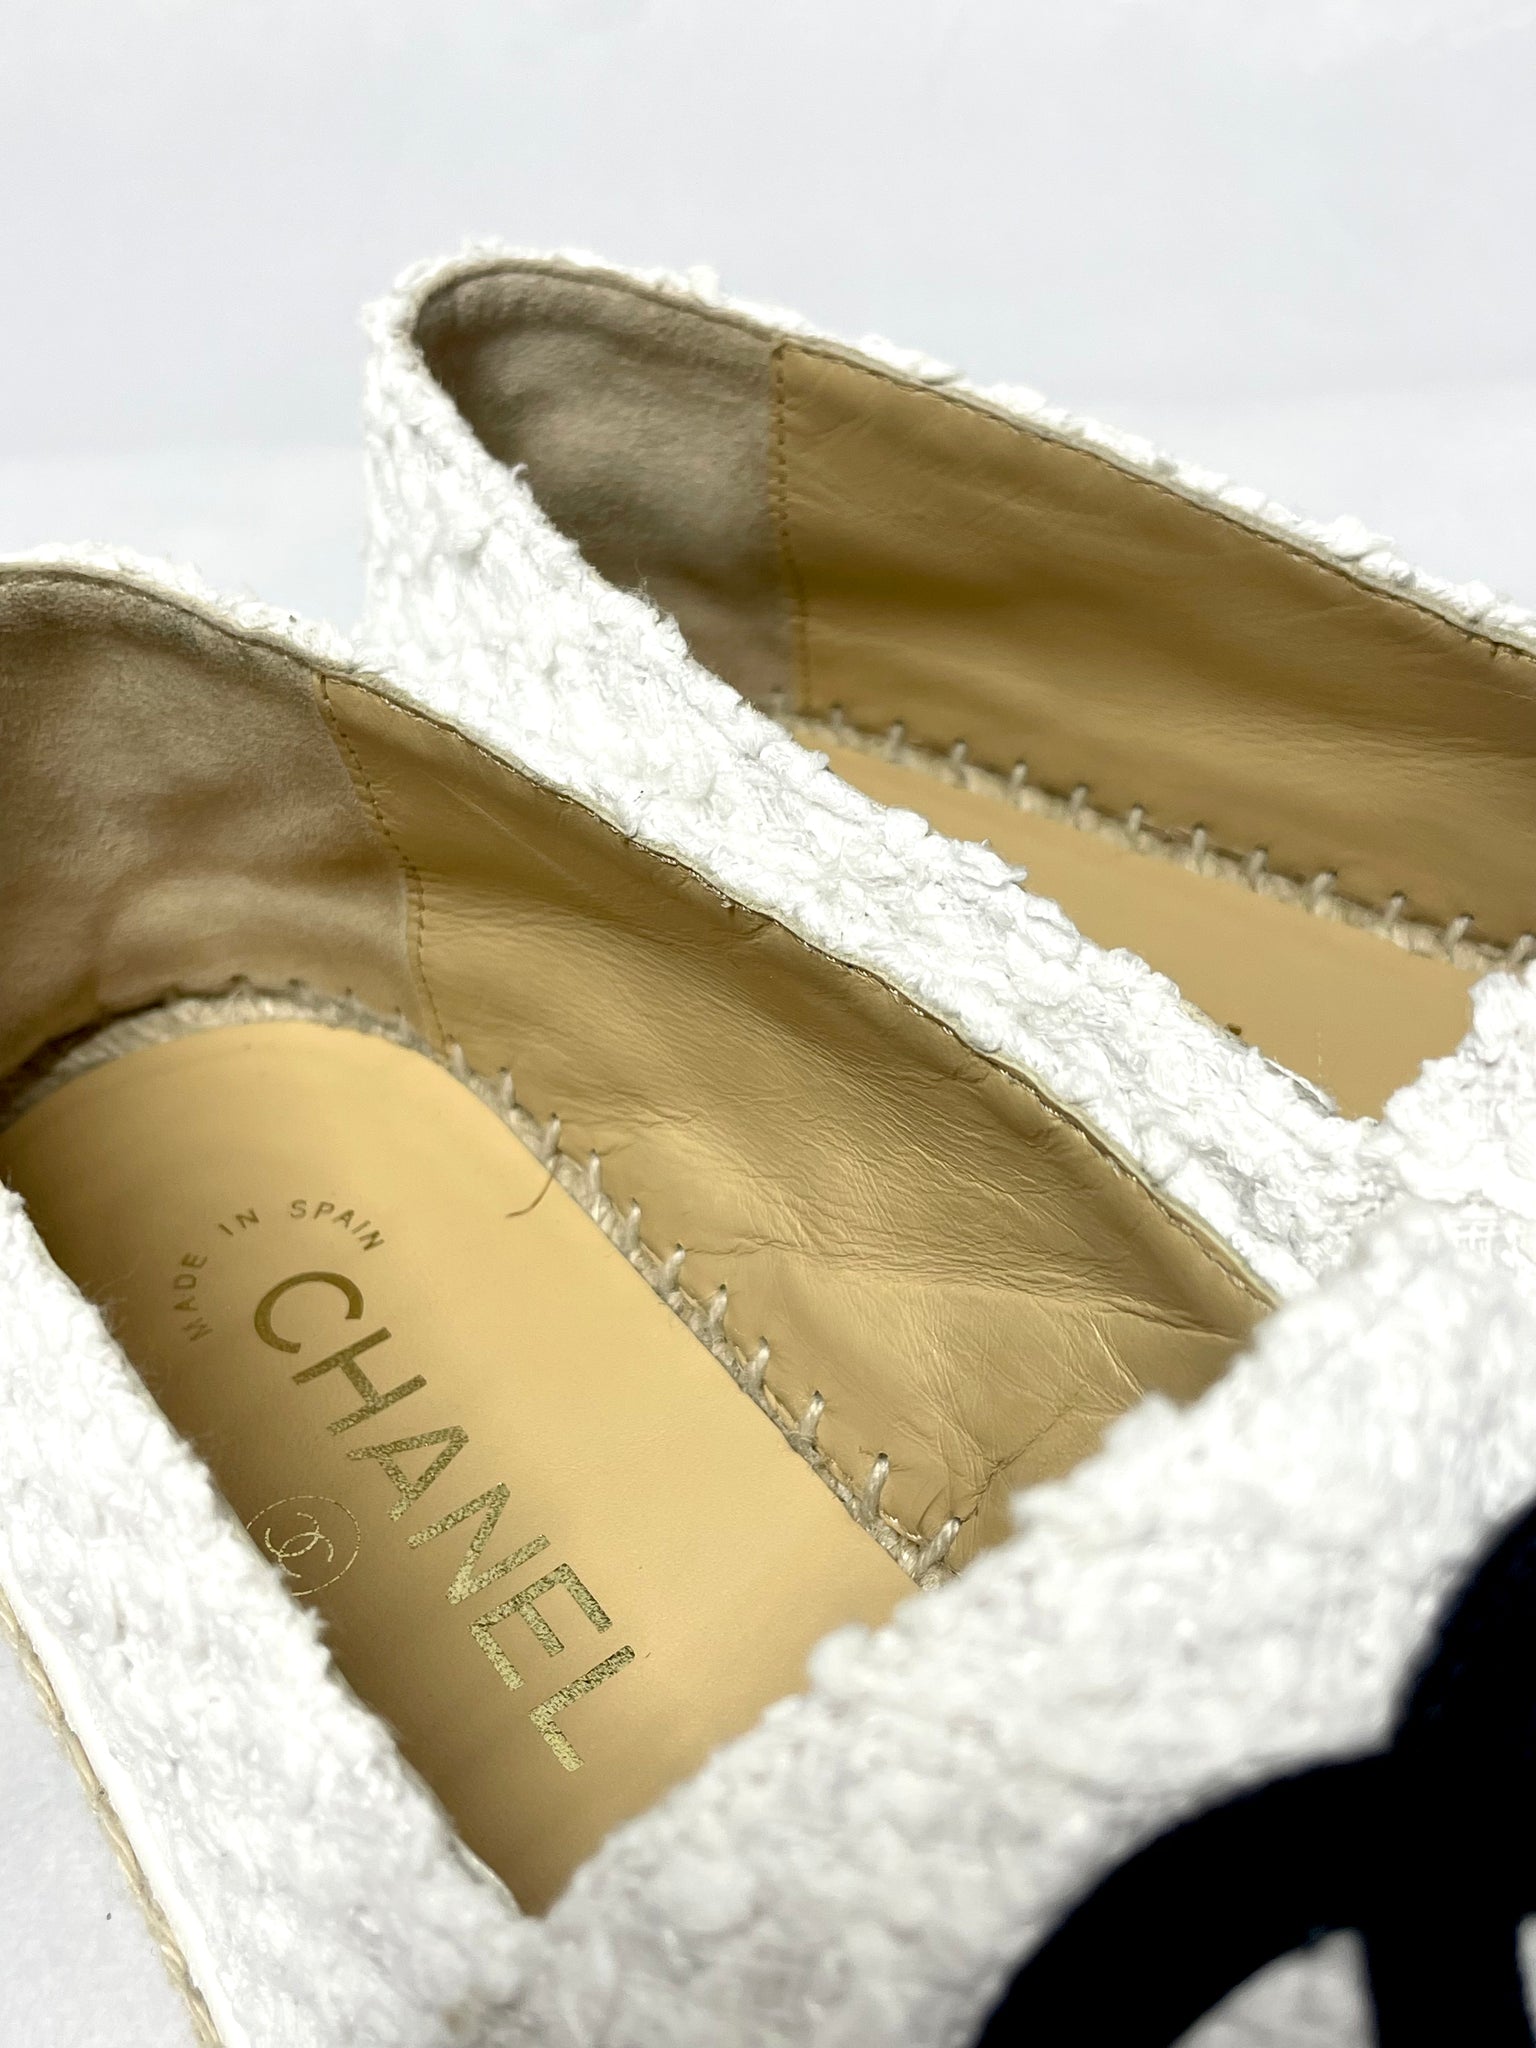 Chanel Tweed Espadrilles 37 *brand new*